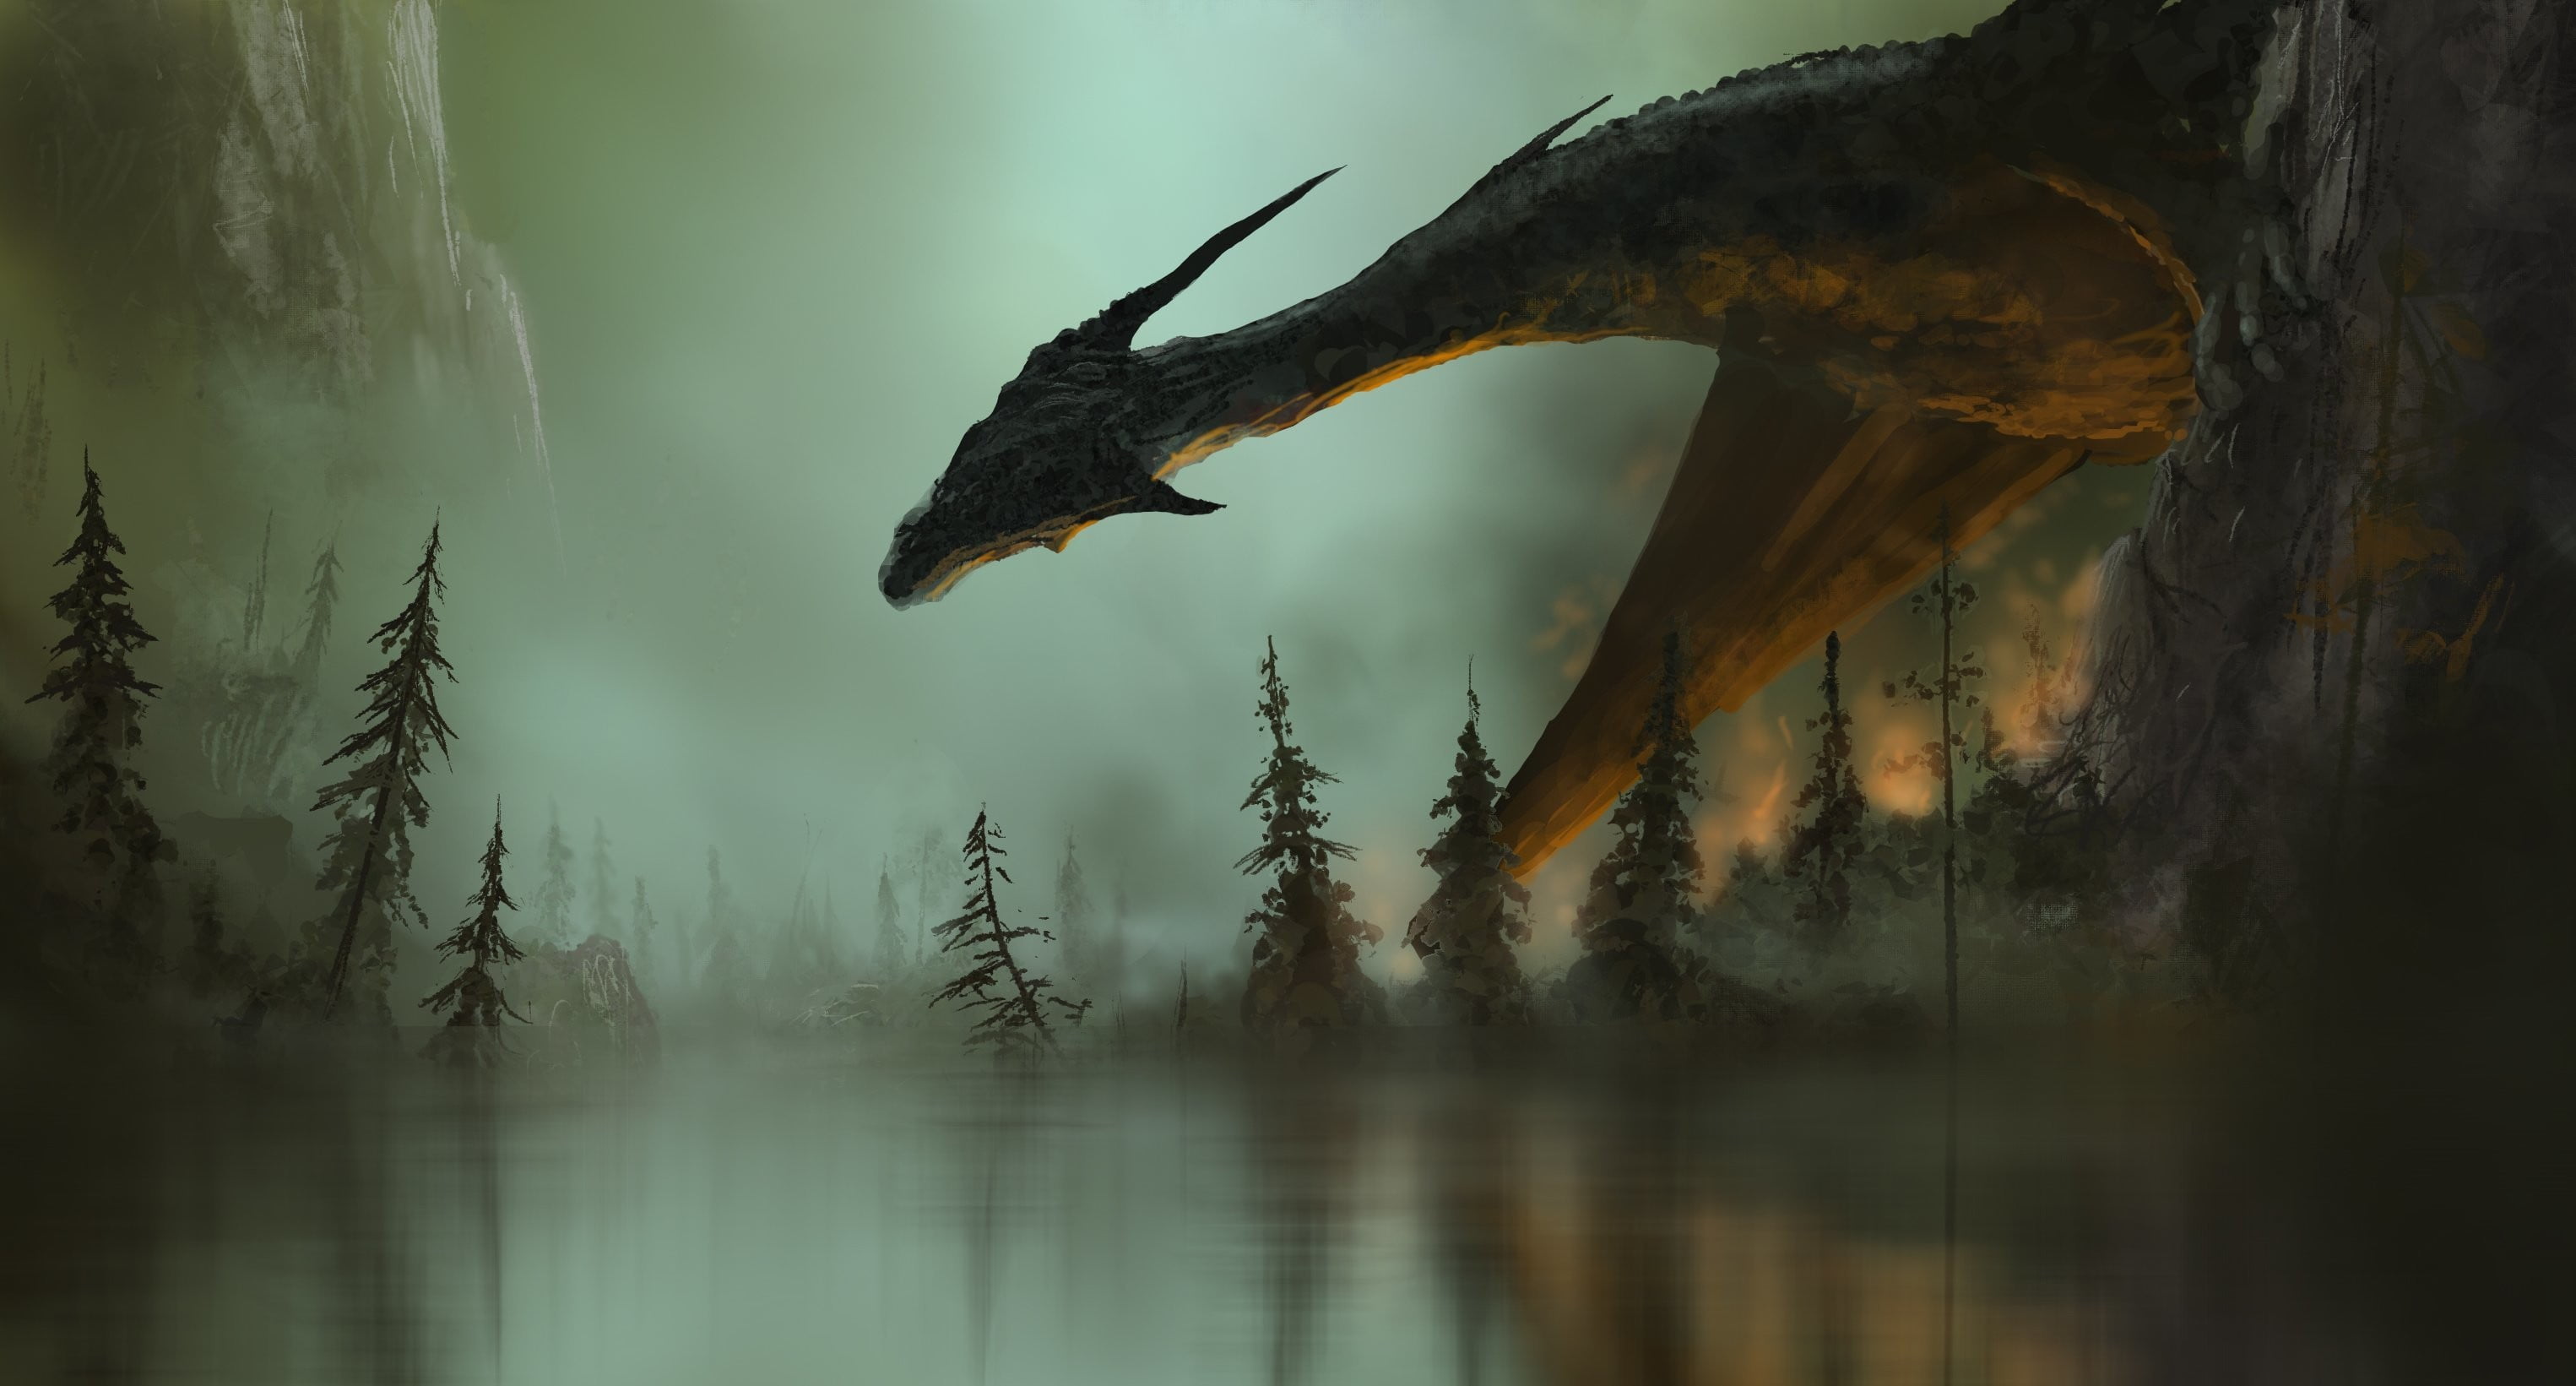 dragon in forest illustration, artwork, digital art, water, tree